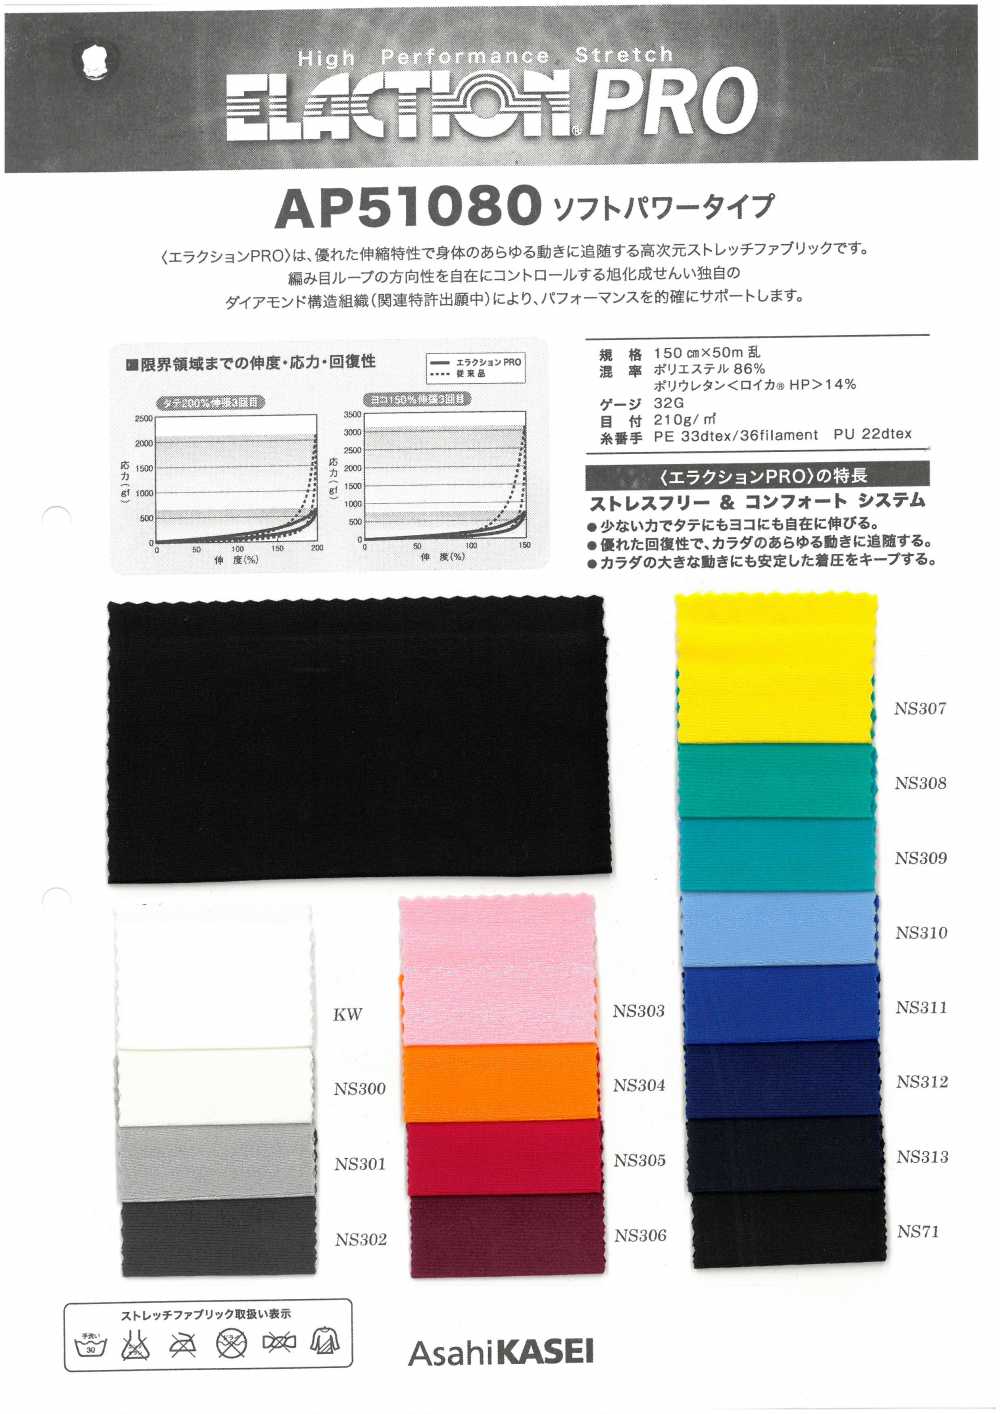 AP51080 Tipo Eraction Pro Soft Power[Têxtil / Tecido] Trecho Do Japão